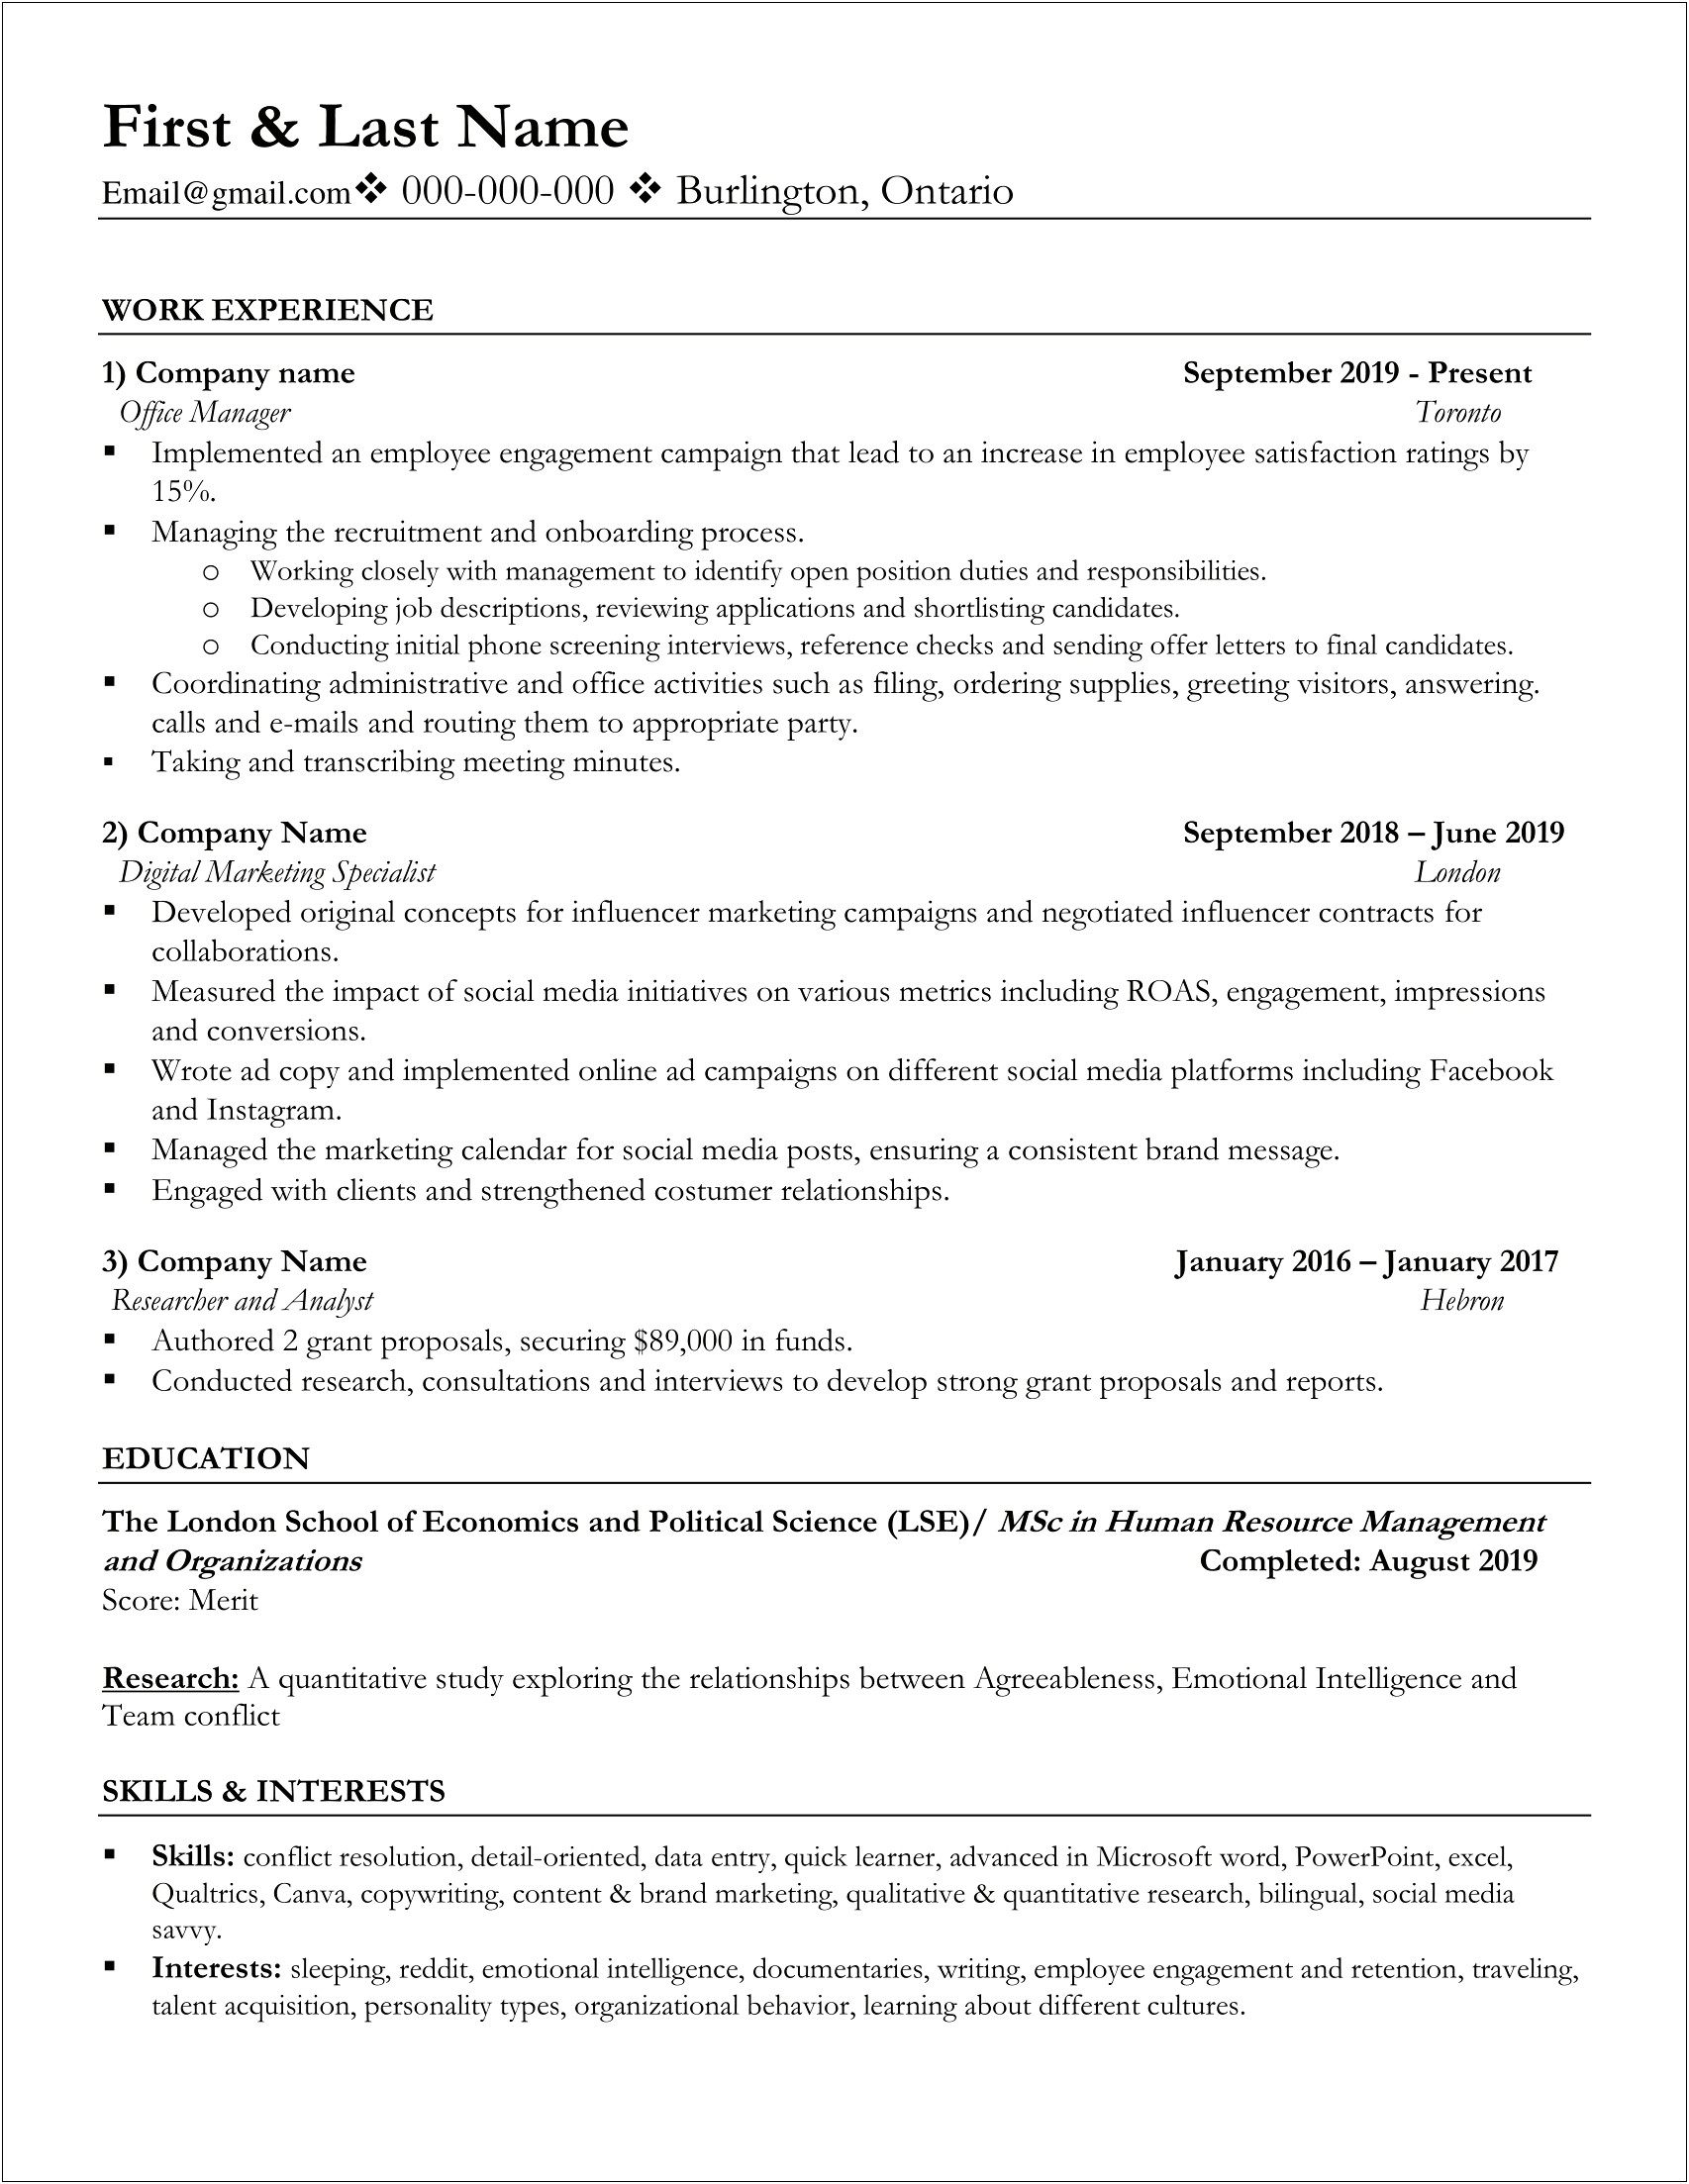 Resume Job Description For Office Manager